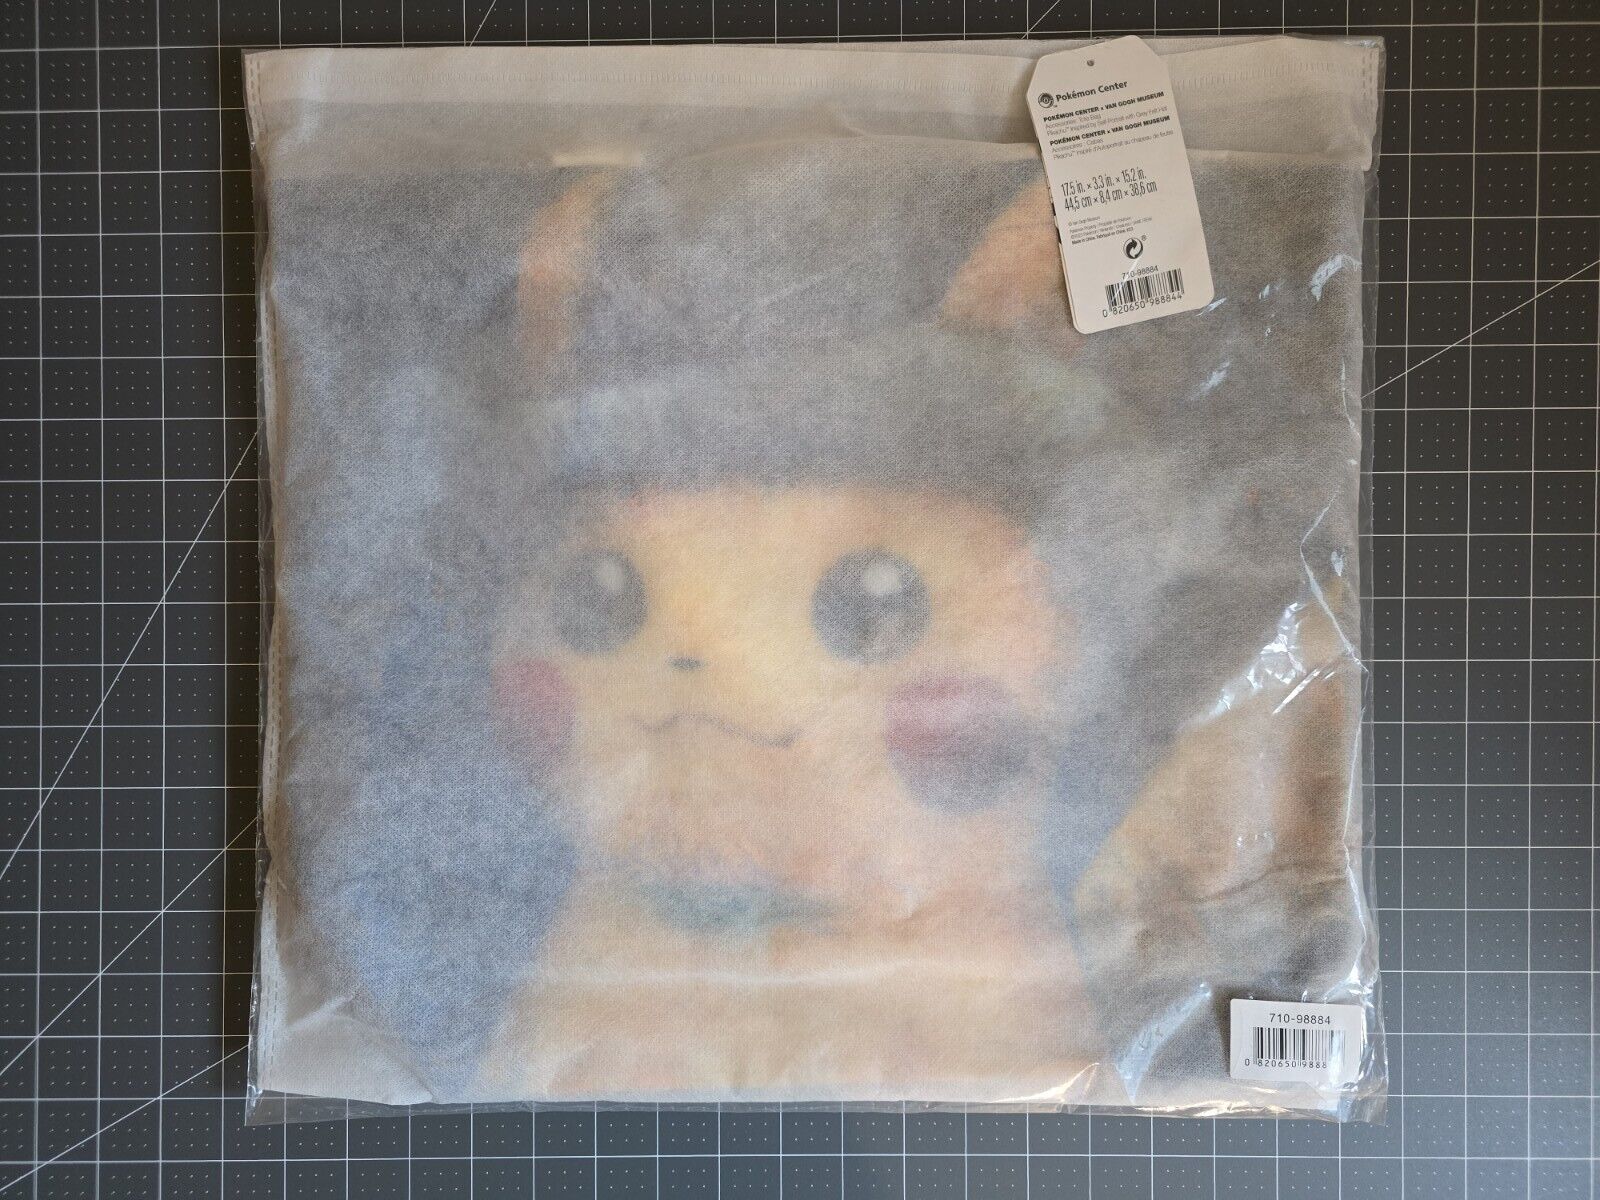 Pokemon Center Van Gogh Museum Pikachu Grey Felt Hat Canvas Tote Bag New Sealed